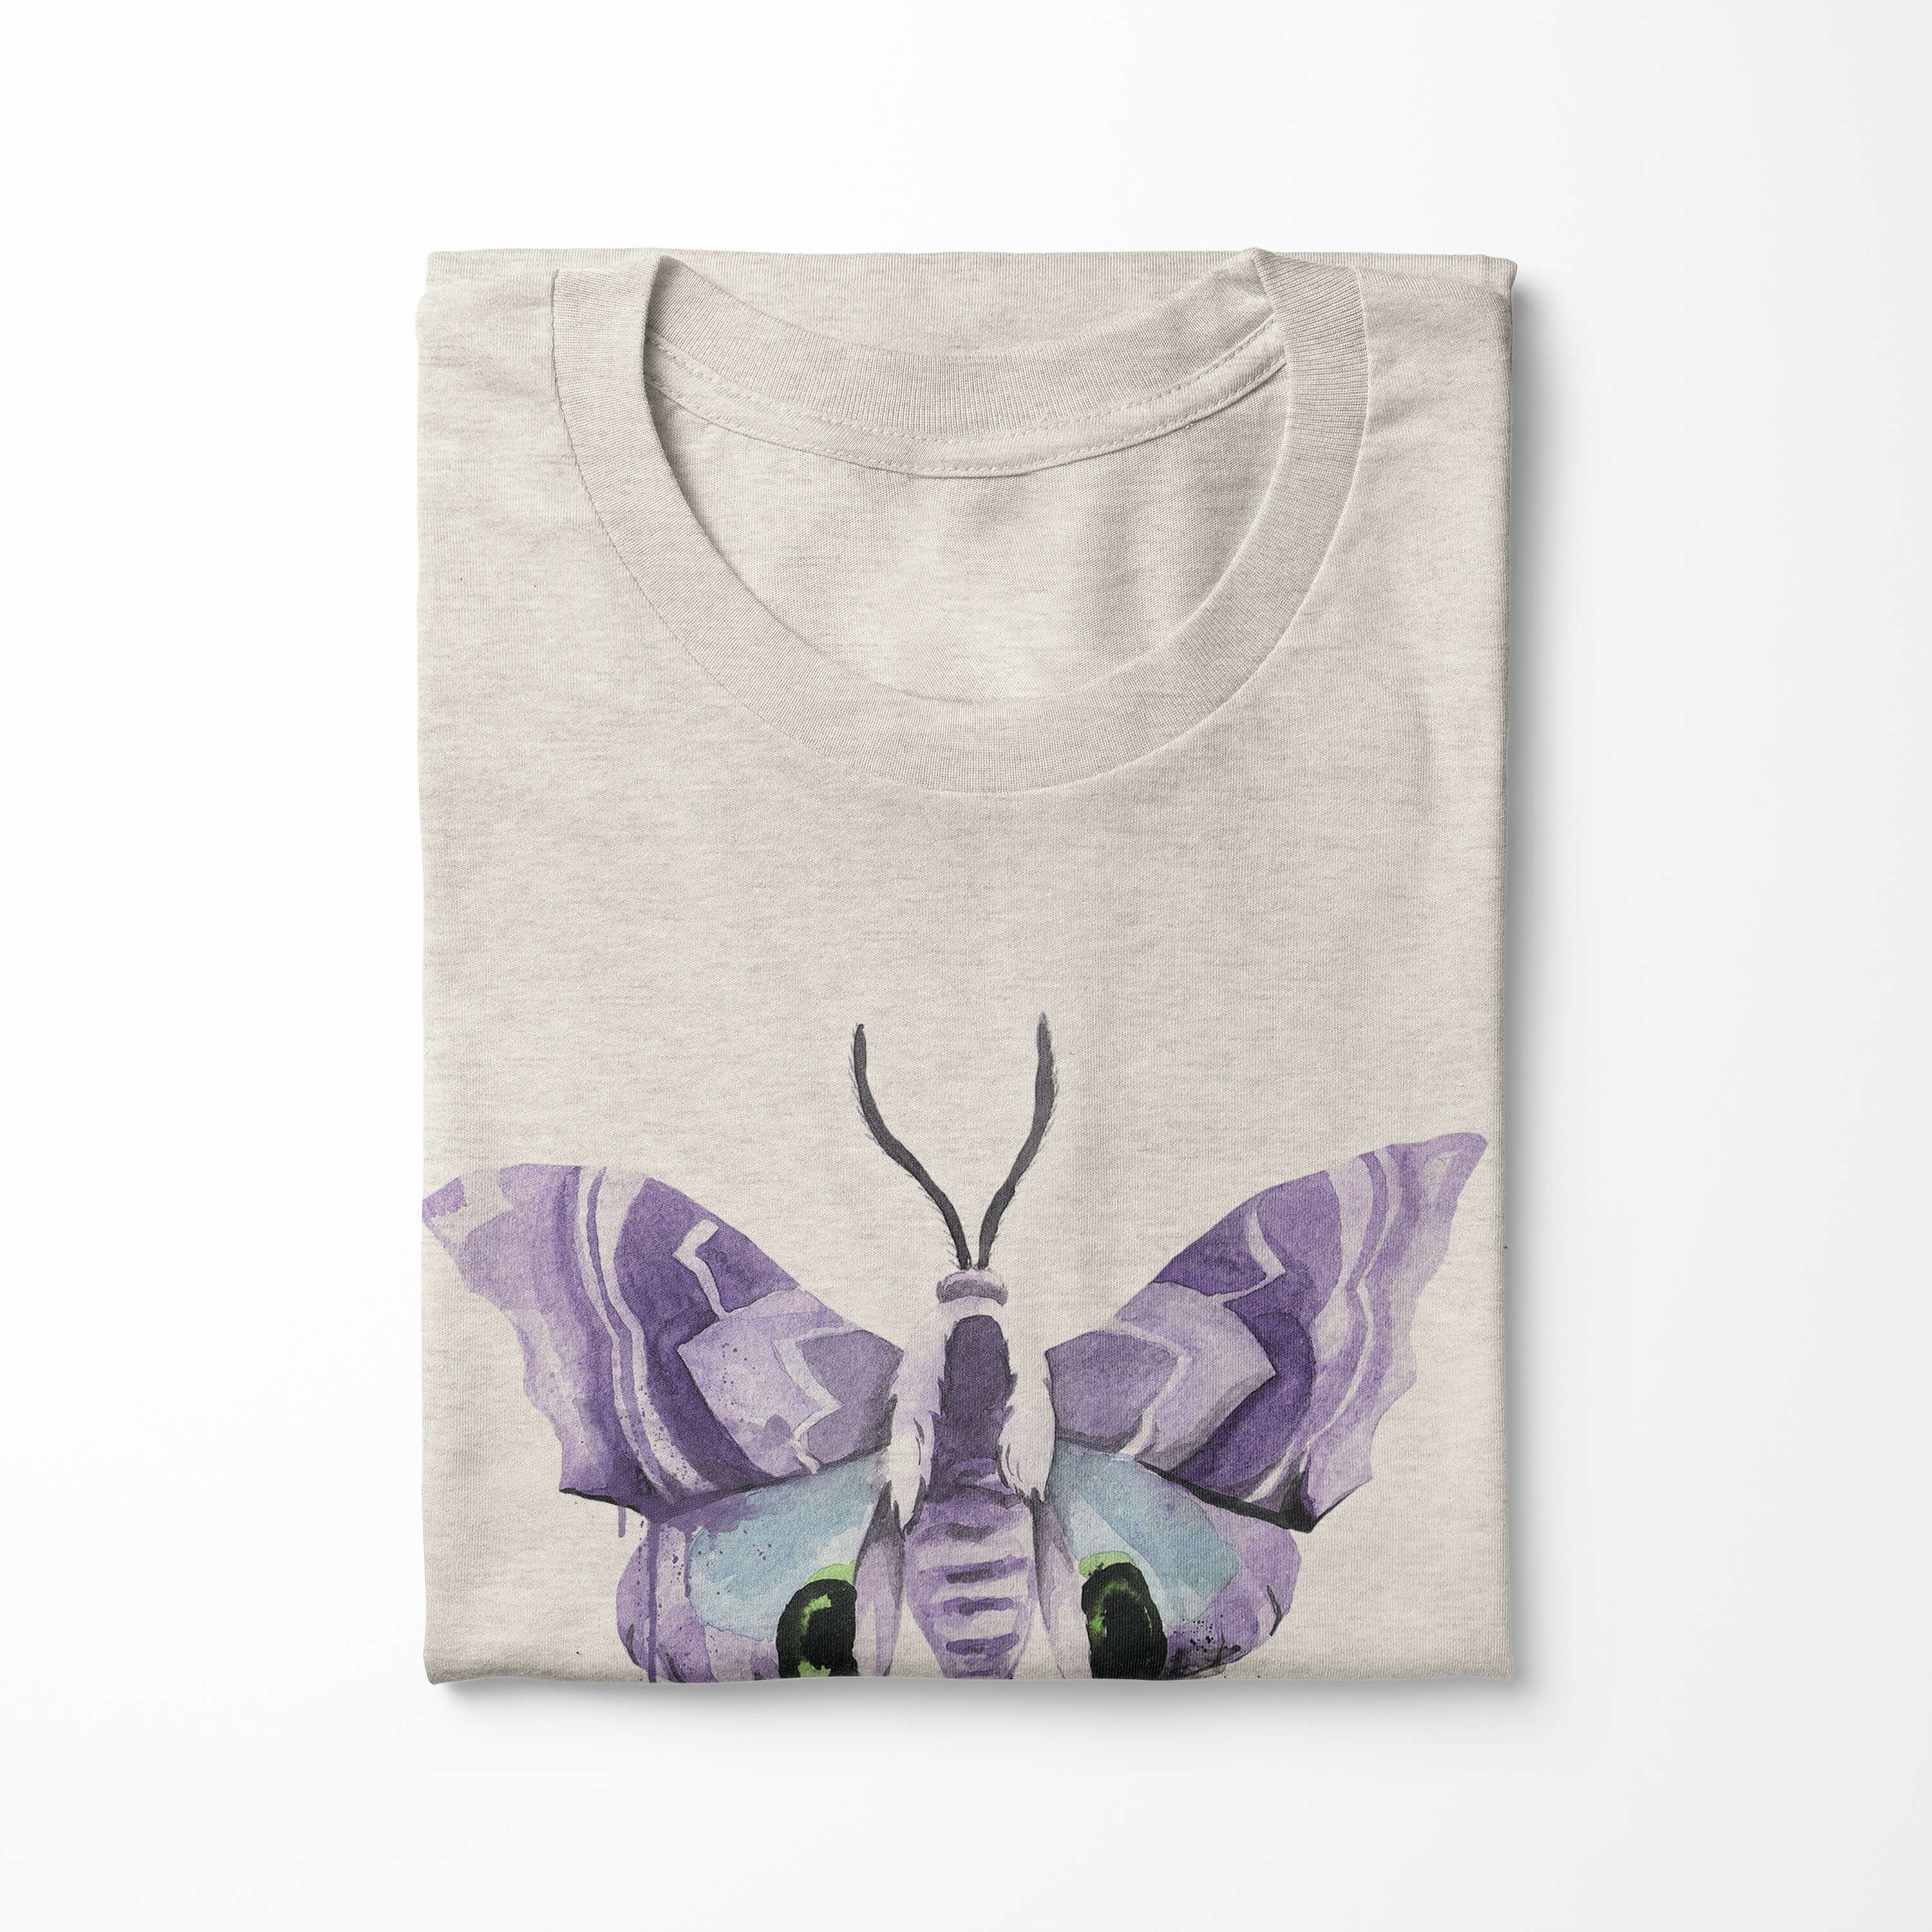 T-Shirt (1-tlg) Herren Farbe Ökomode Aquarell Nachhaltig Art Motte Shirt Sinus 100% Bio-Baumwolle Organic T-Shirt Motiv